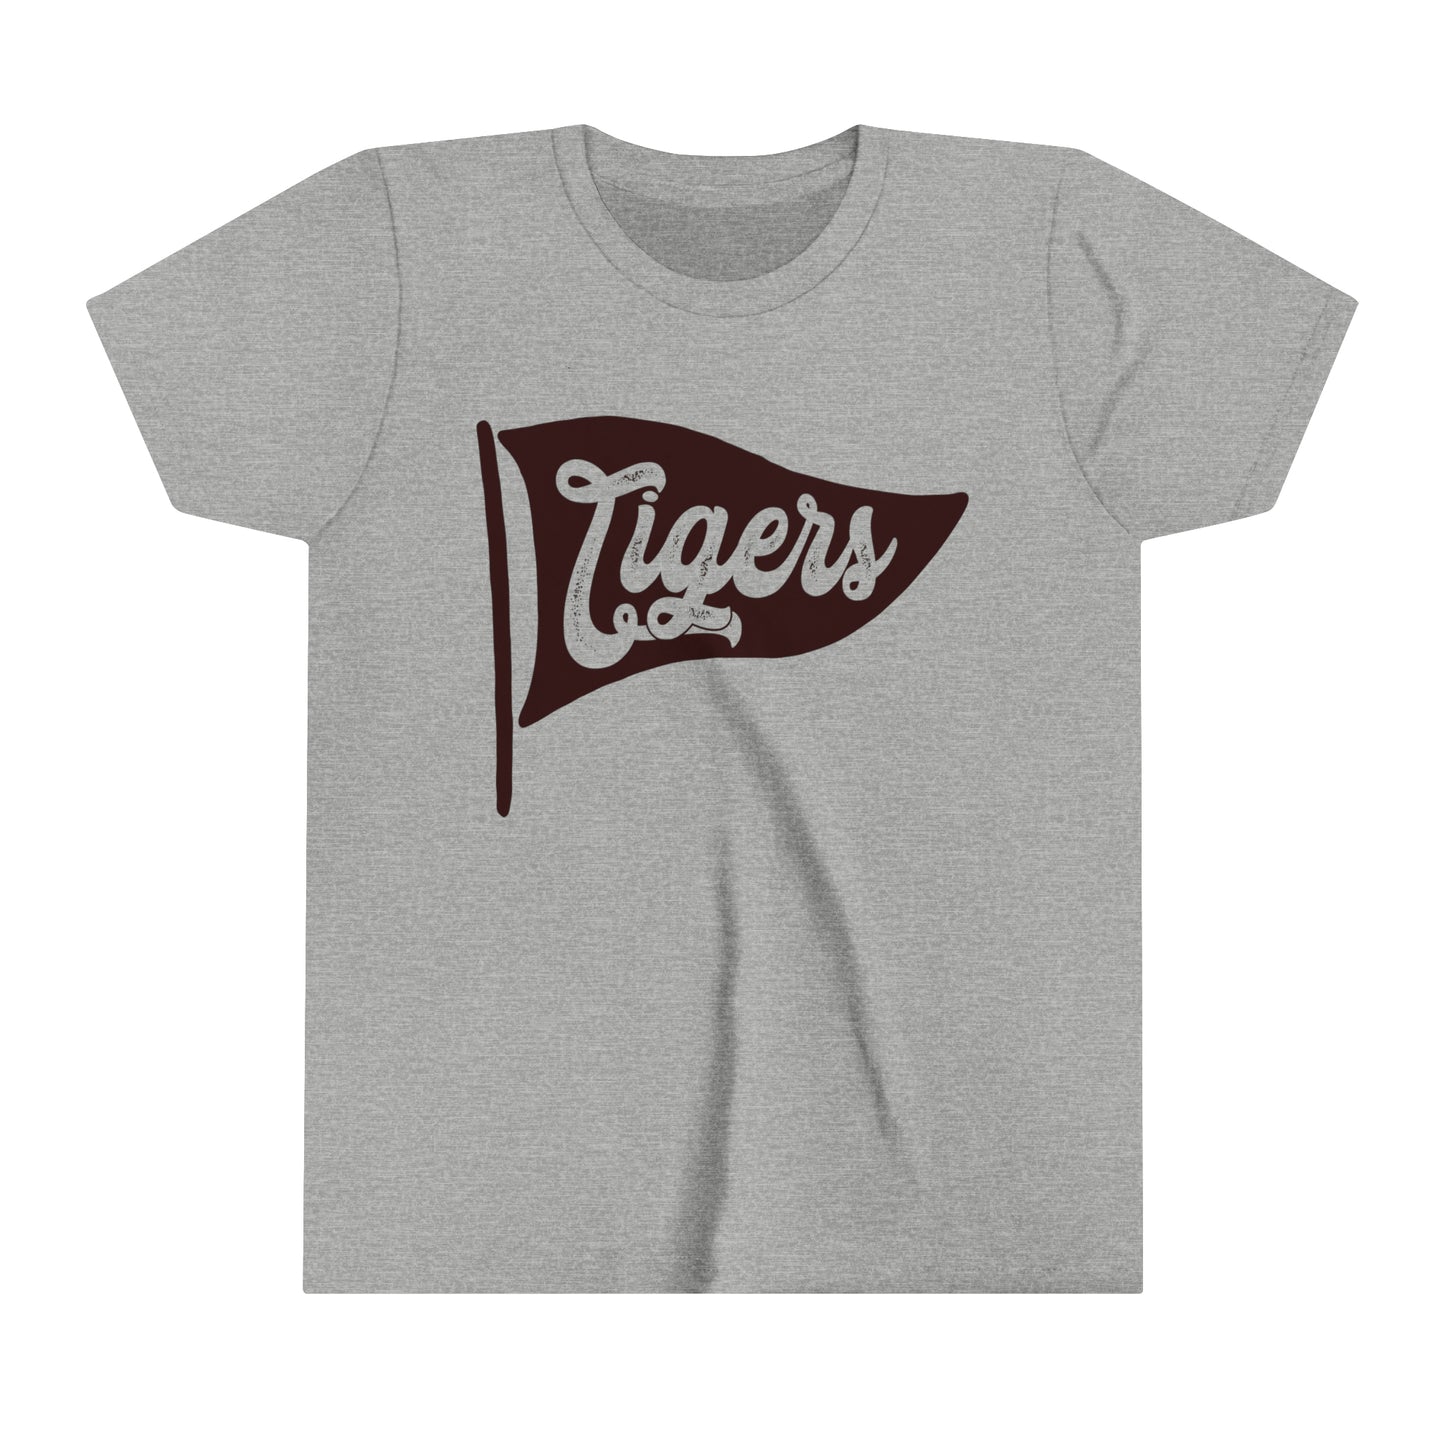 Tigers Pennant Youth Tshirt